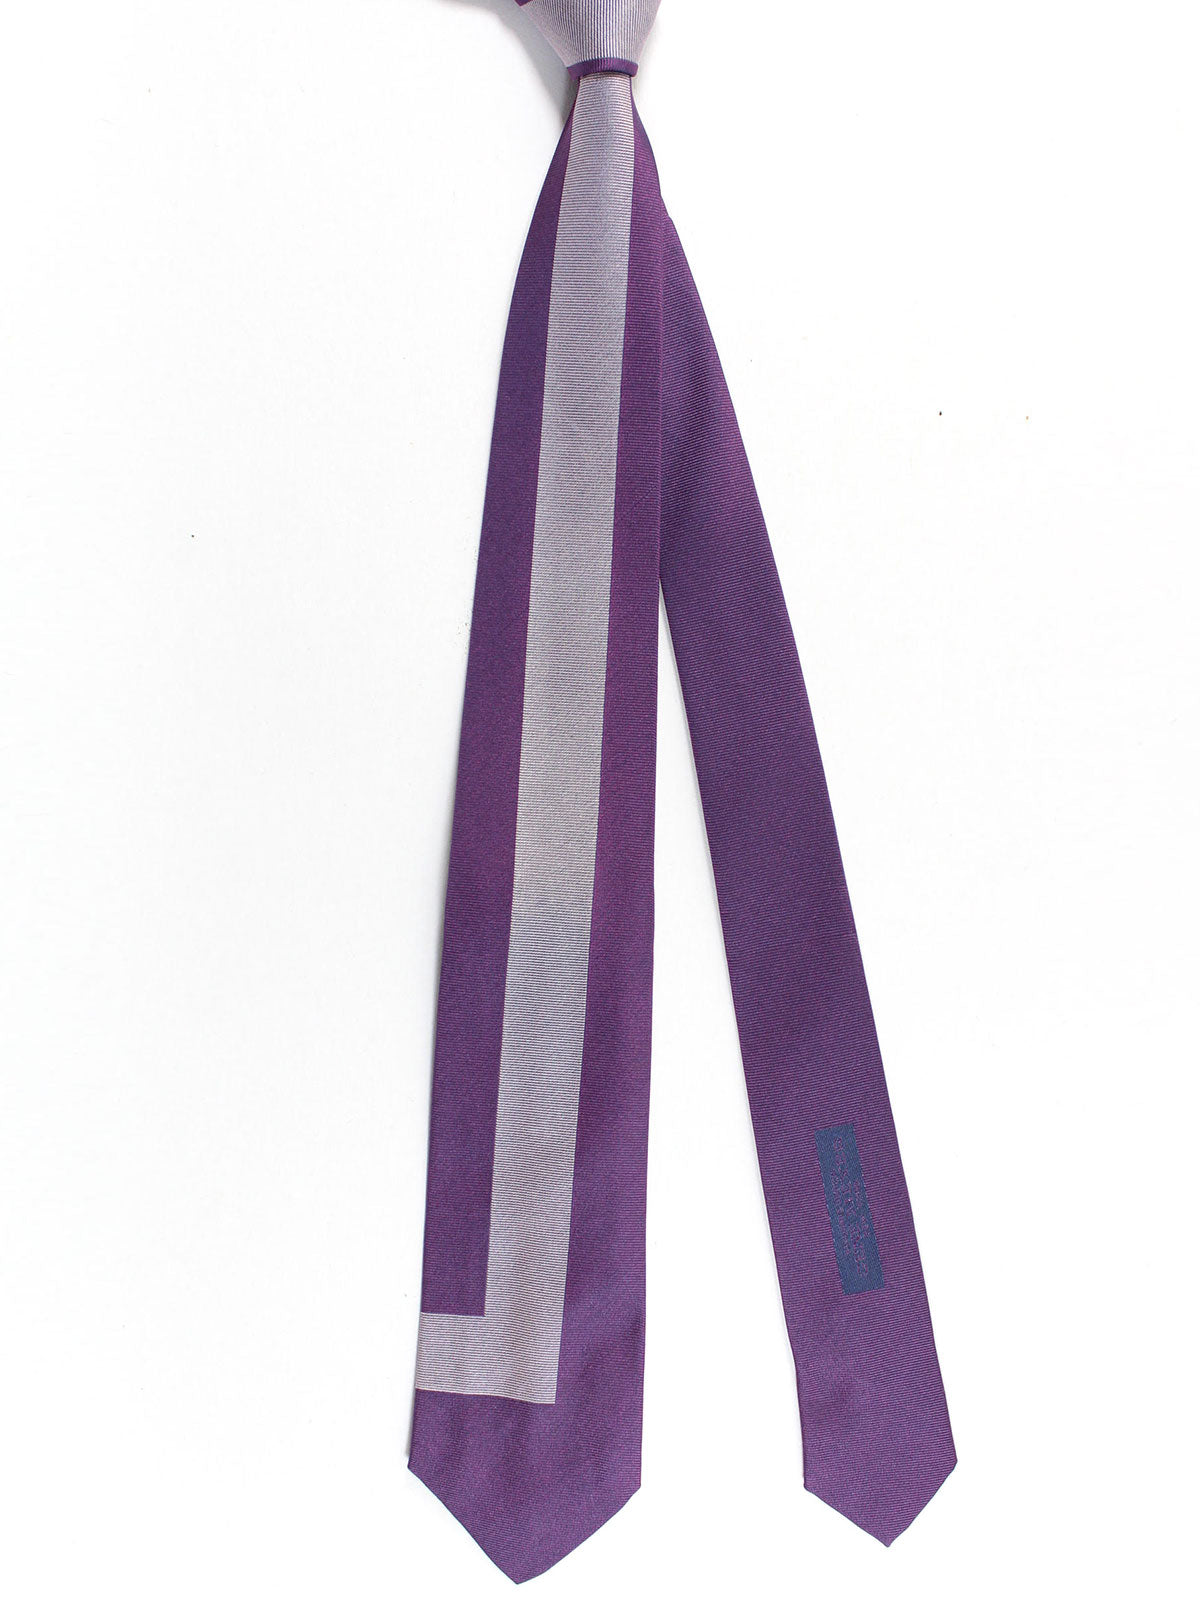 Gene Meyer Tie Purple Stripes Design - Hand Made in Italy